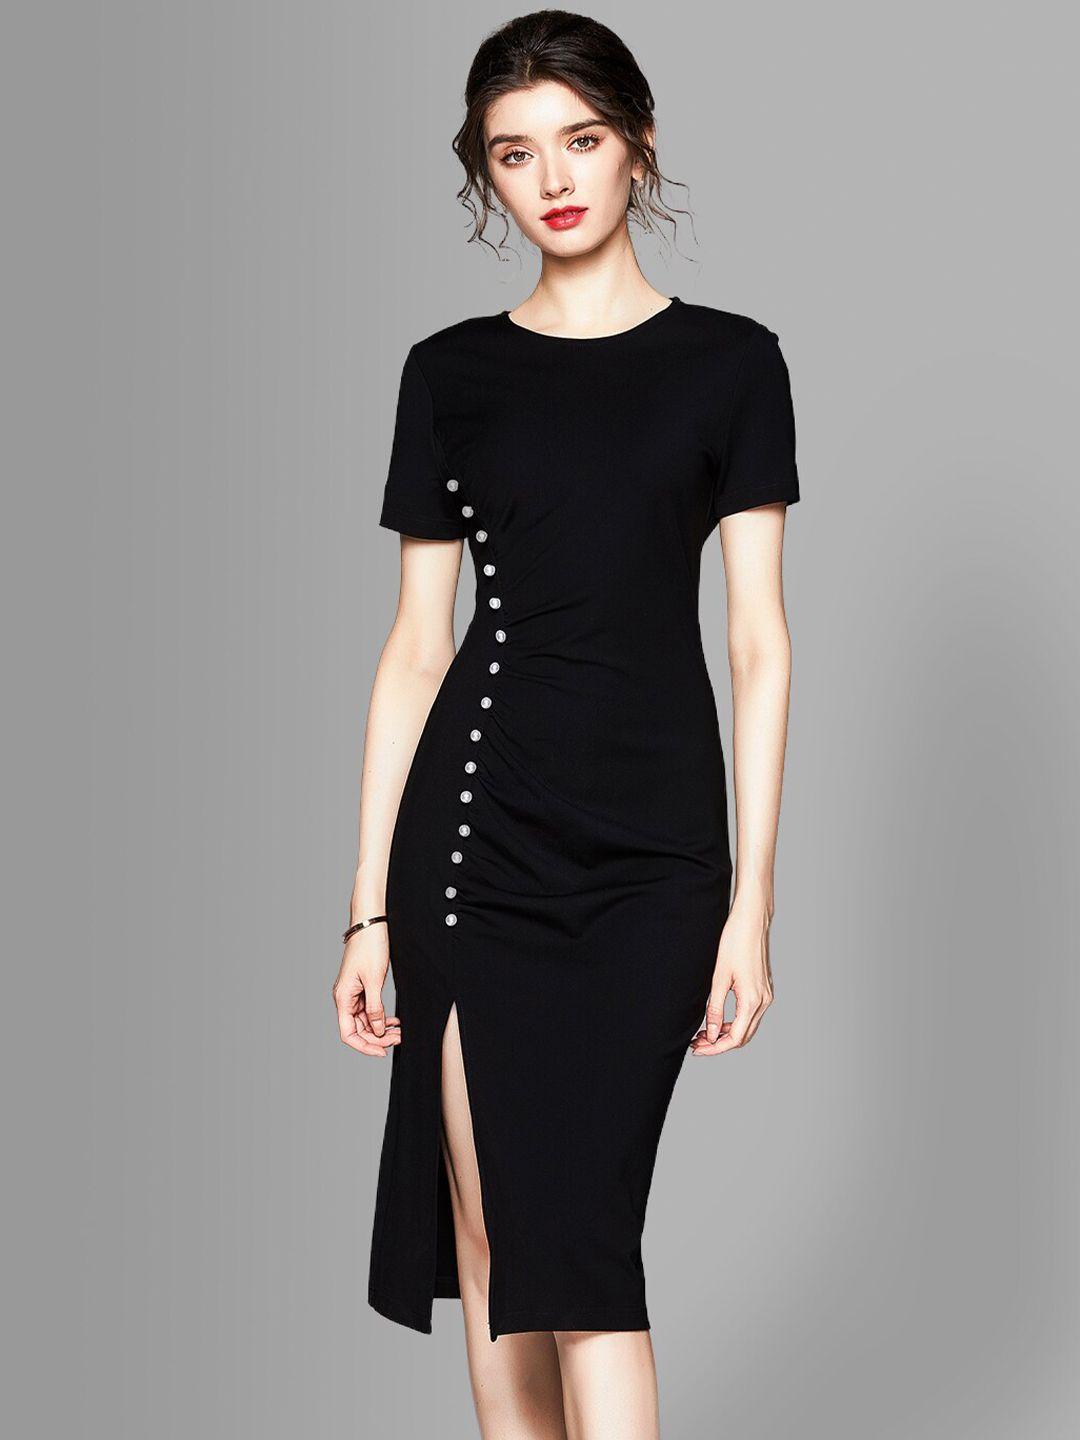 jc-collection-black-solid-sheath-dress